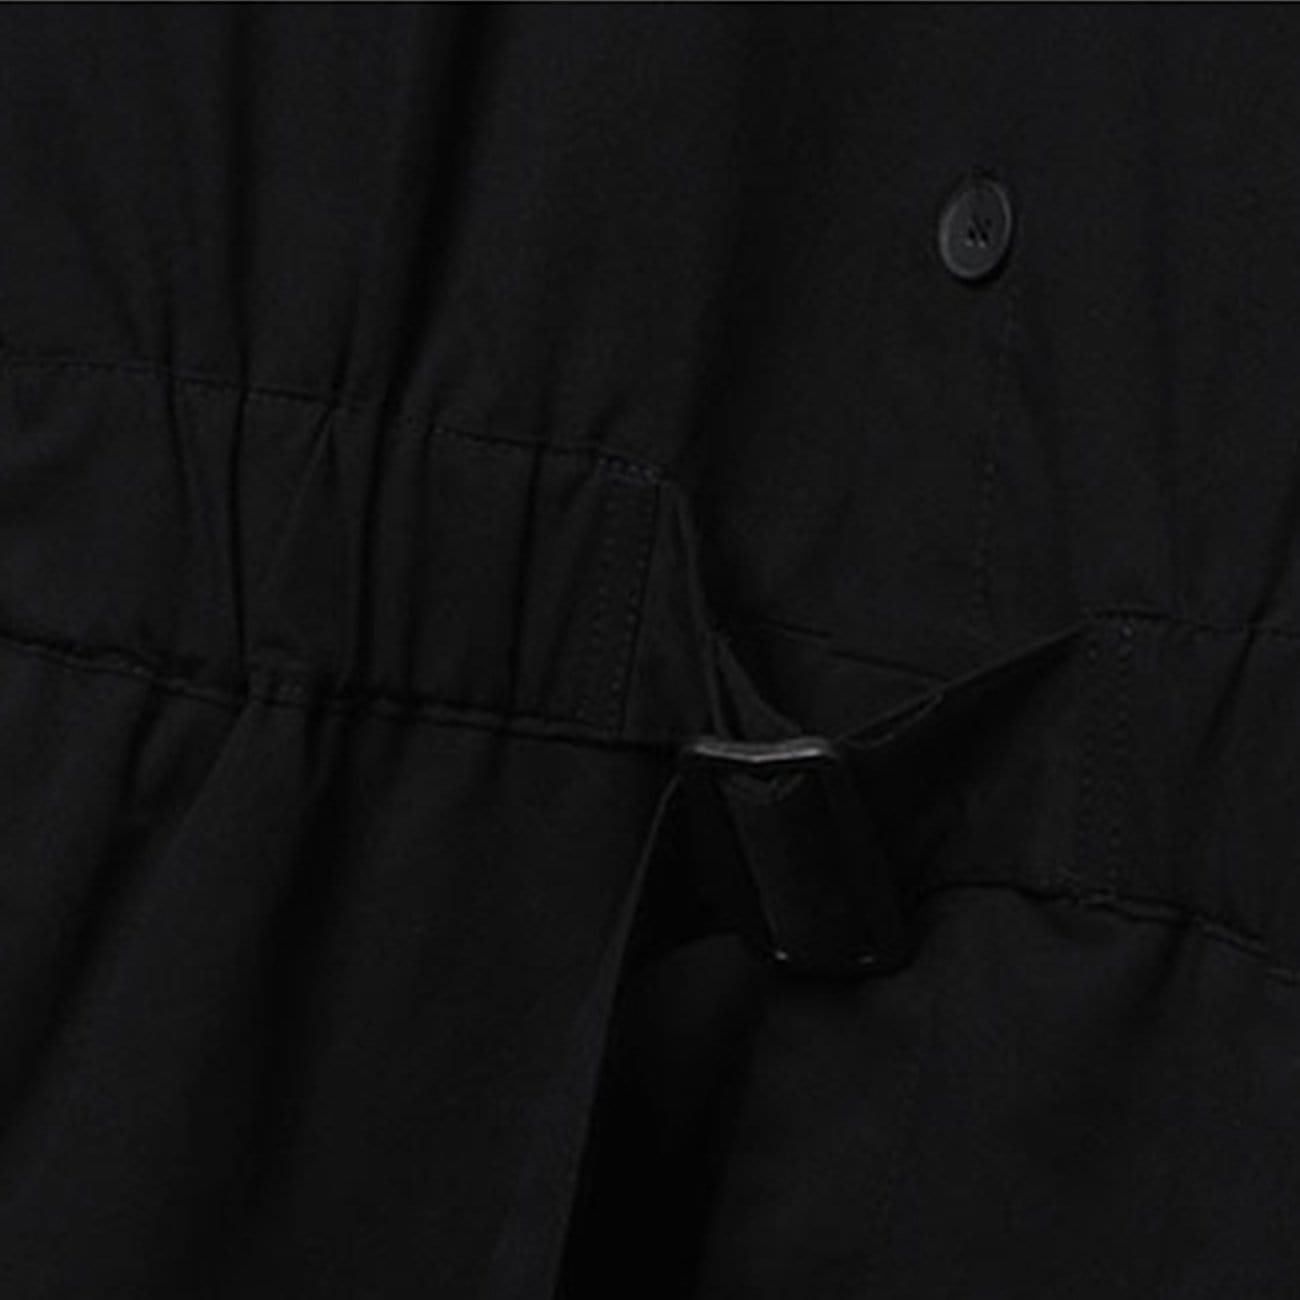 Functional Button Belt Jumpsuit Streetwear Brand Techwear Combat Tactical YUGEN THEORY